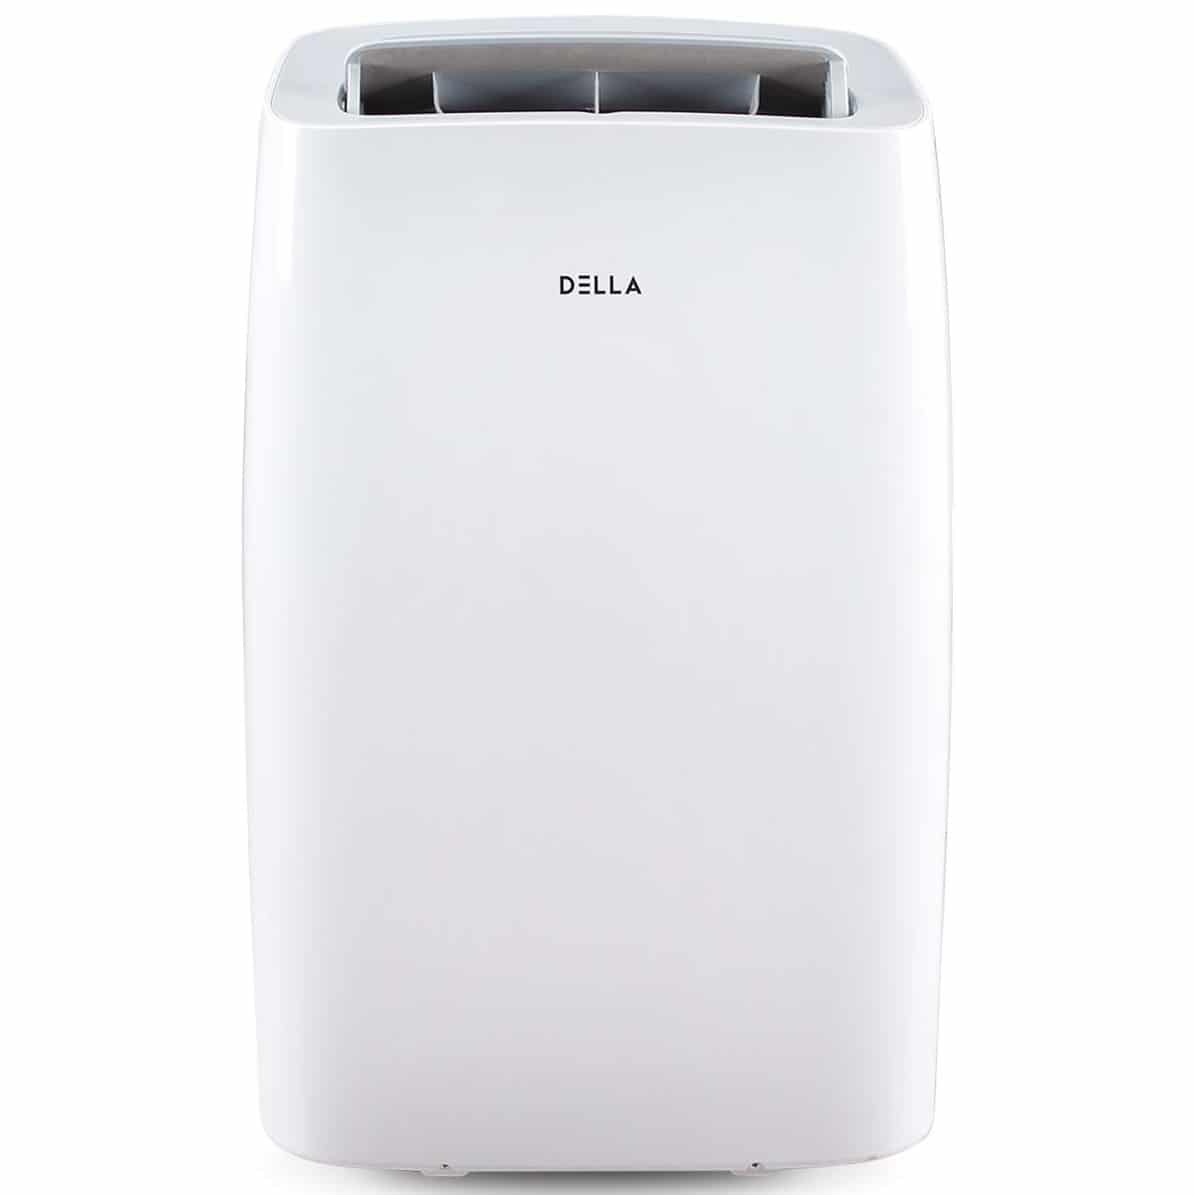 DELLA 14000 BTU Portable Air Conditioner